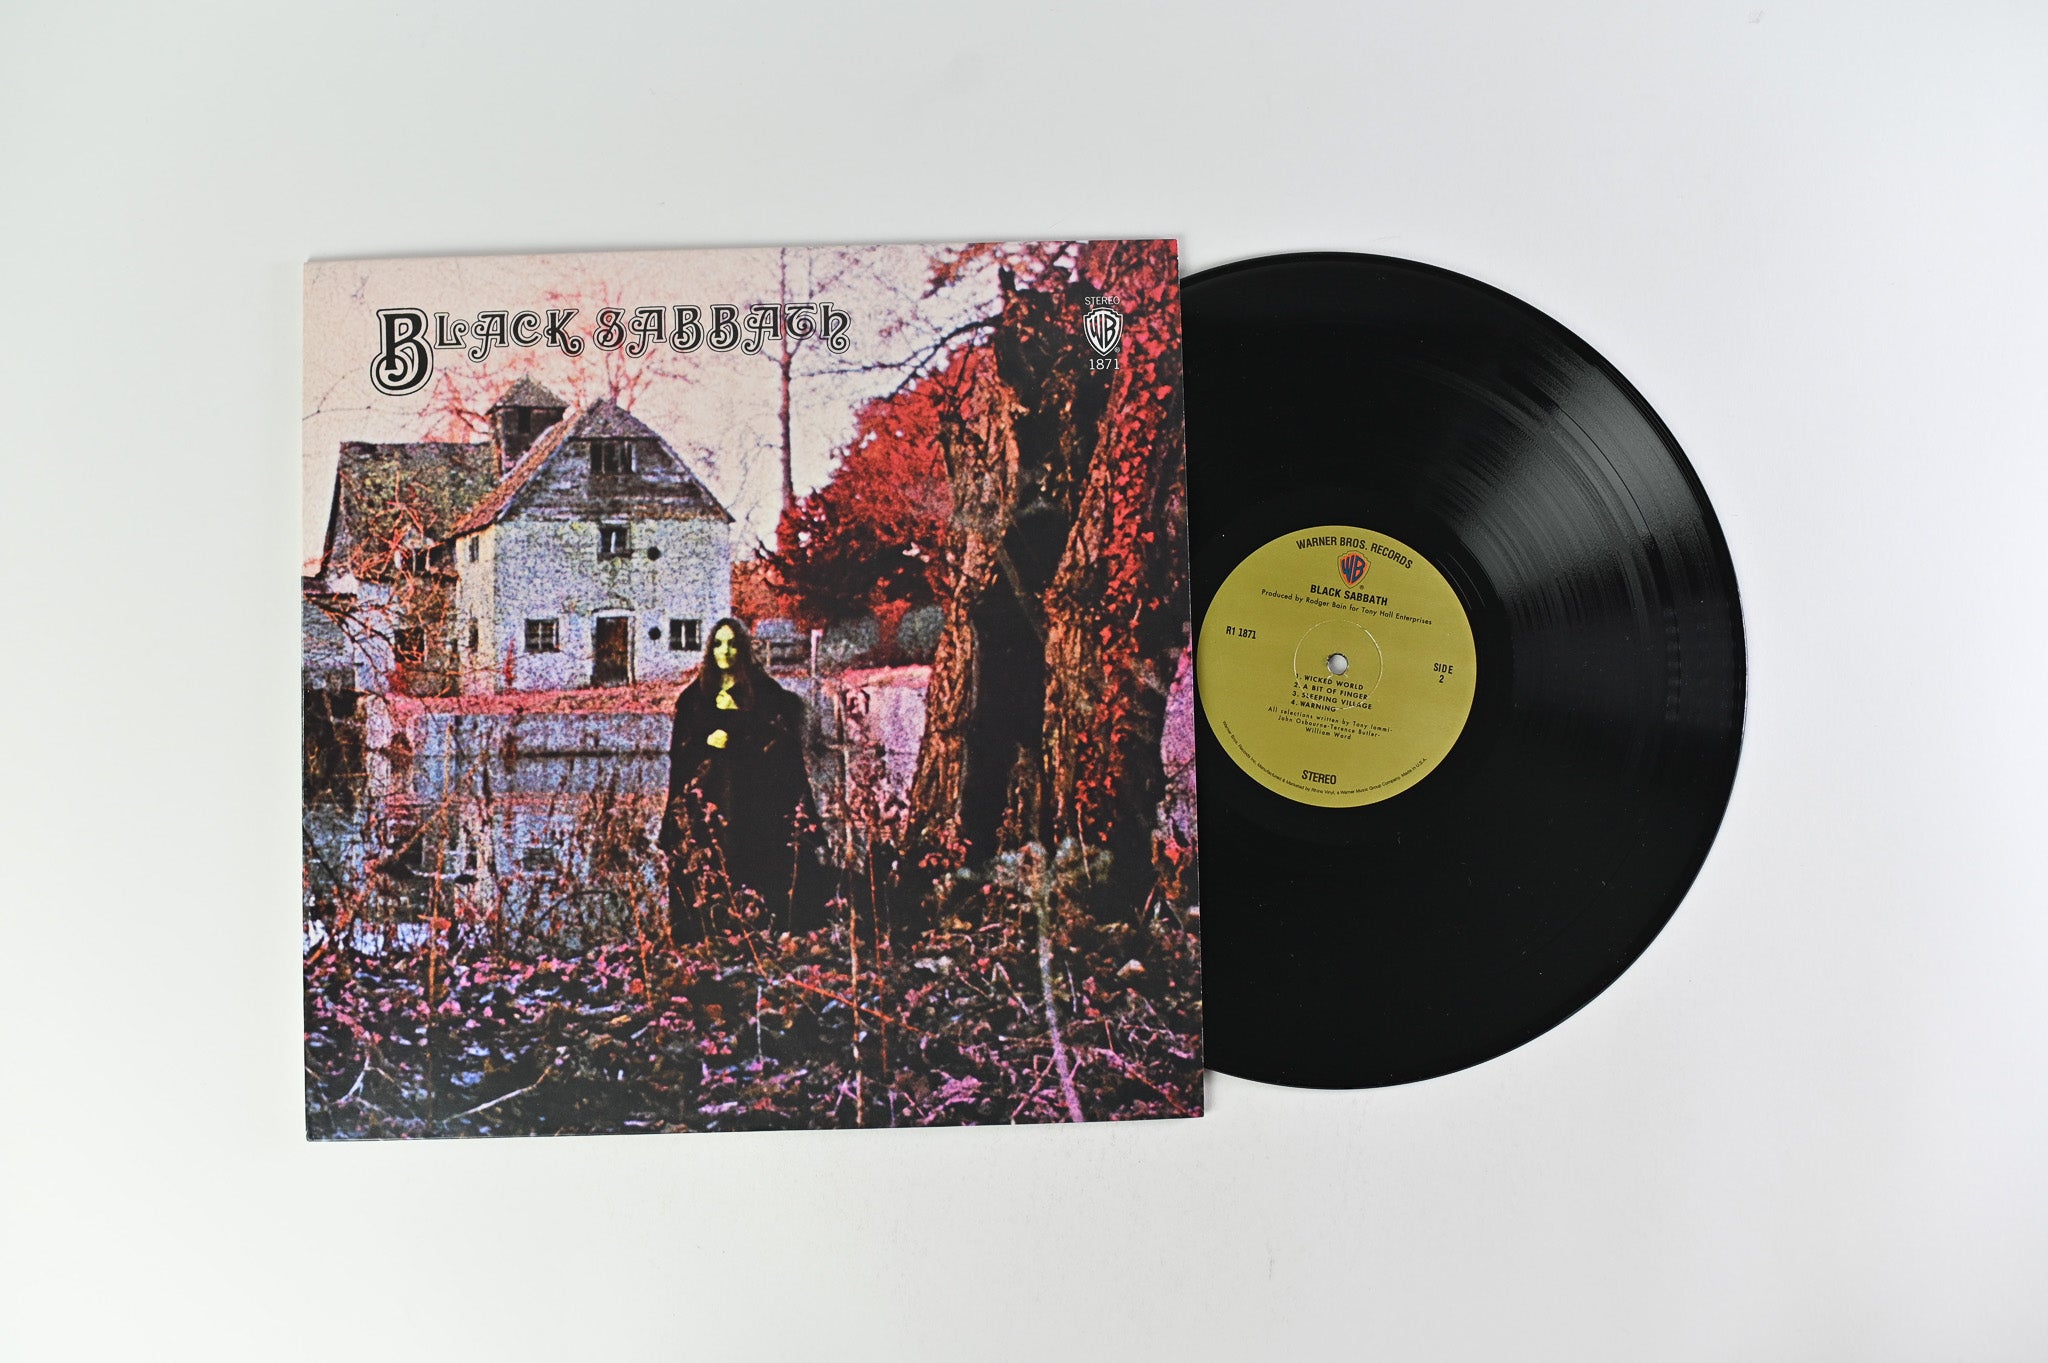 Black Sabbath - Black Sabbath Reissue on Rhino/Warner Bros. Records